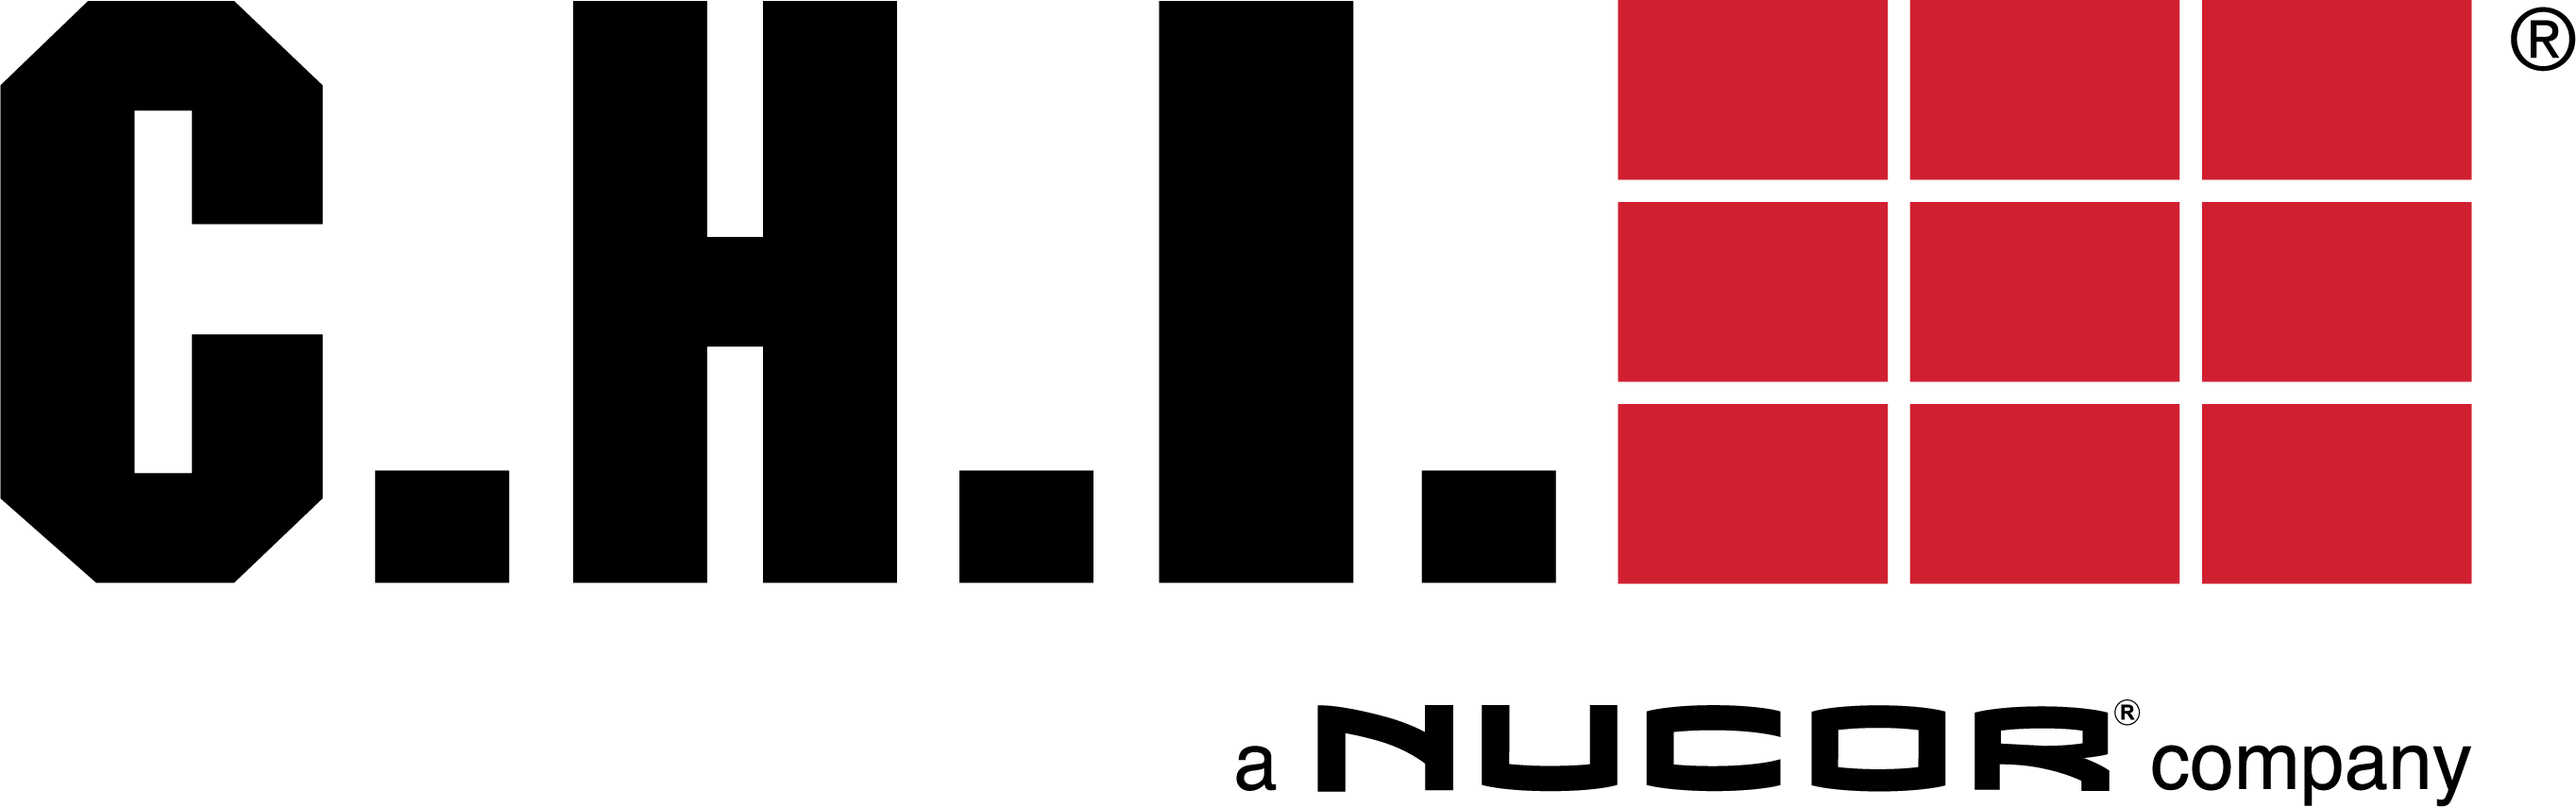 C.H.I logo